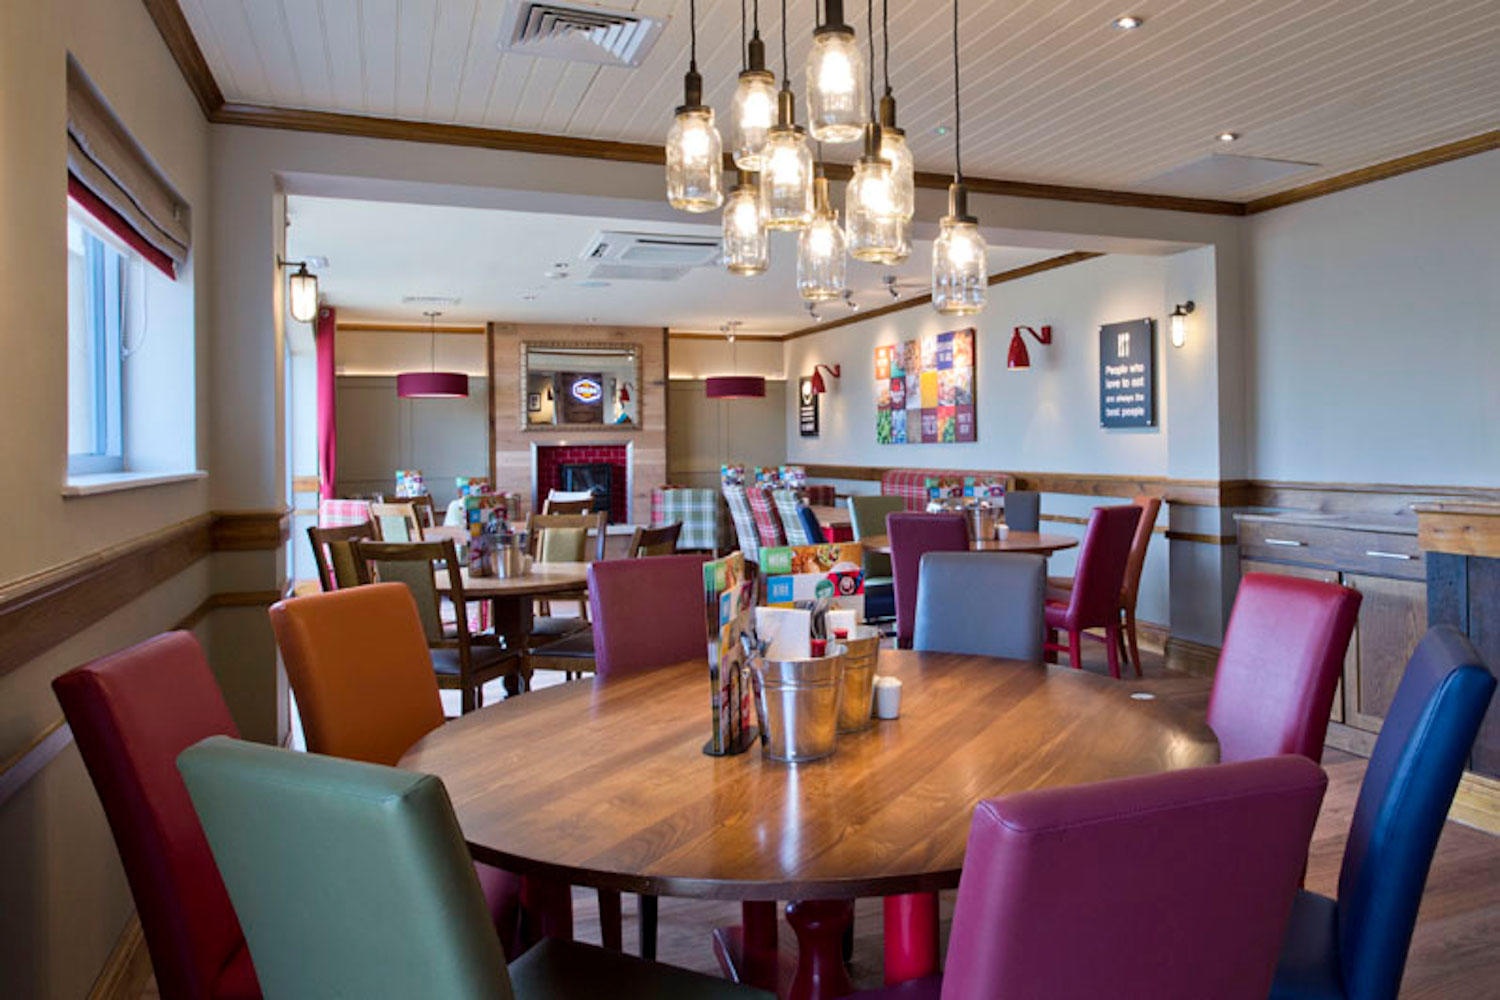 Brewers Fayre restaurant interior Premier Inn Cockermouth hotel Cockermouth 03332 346527